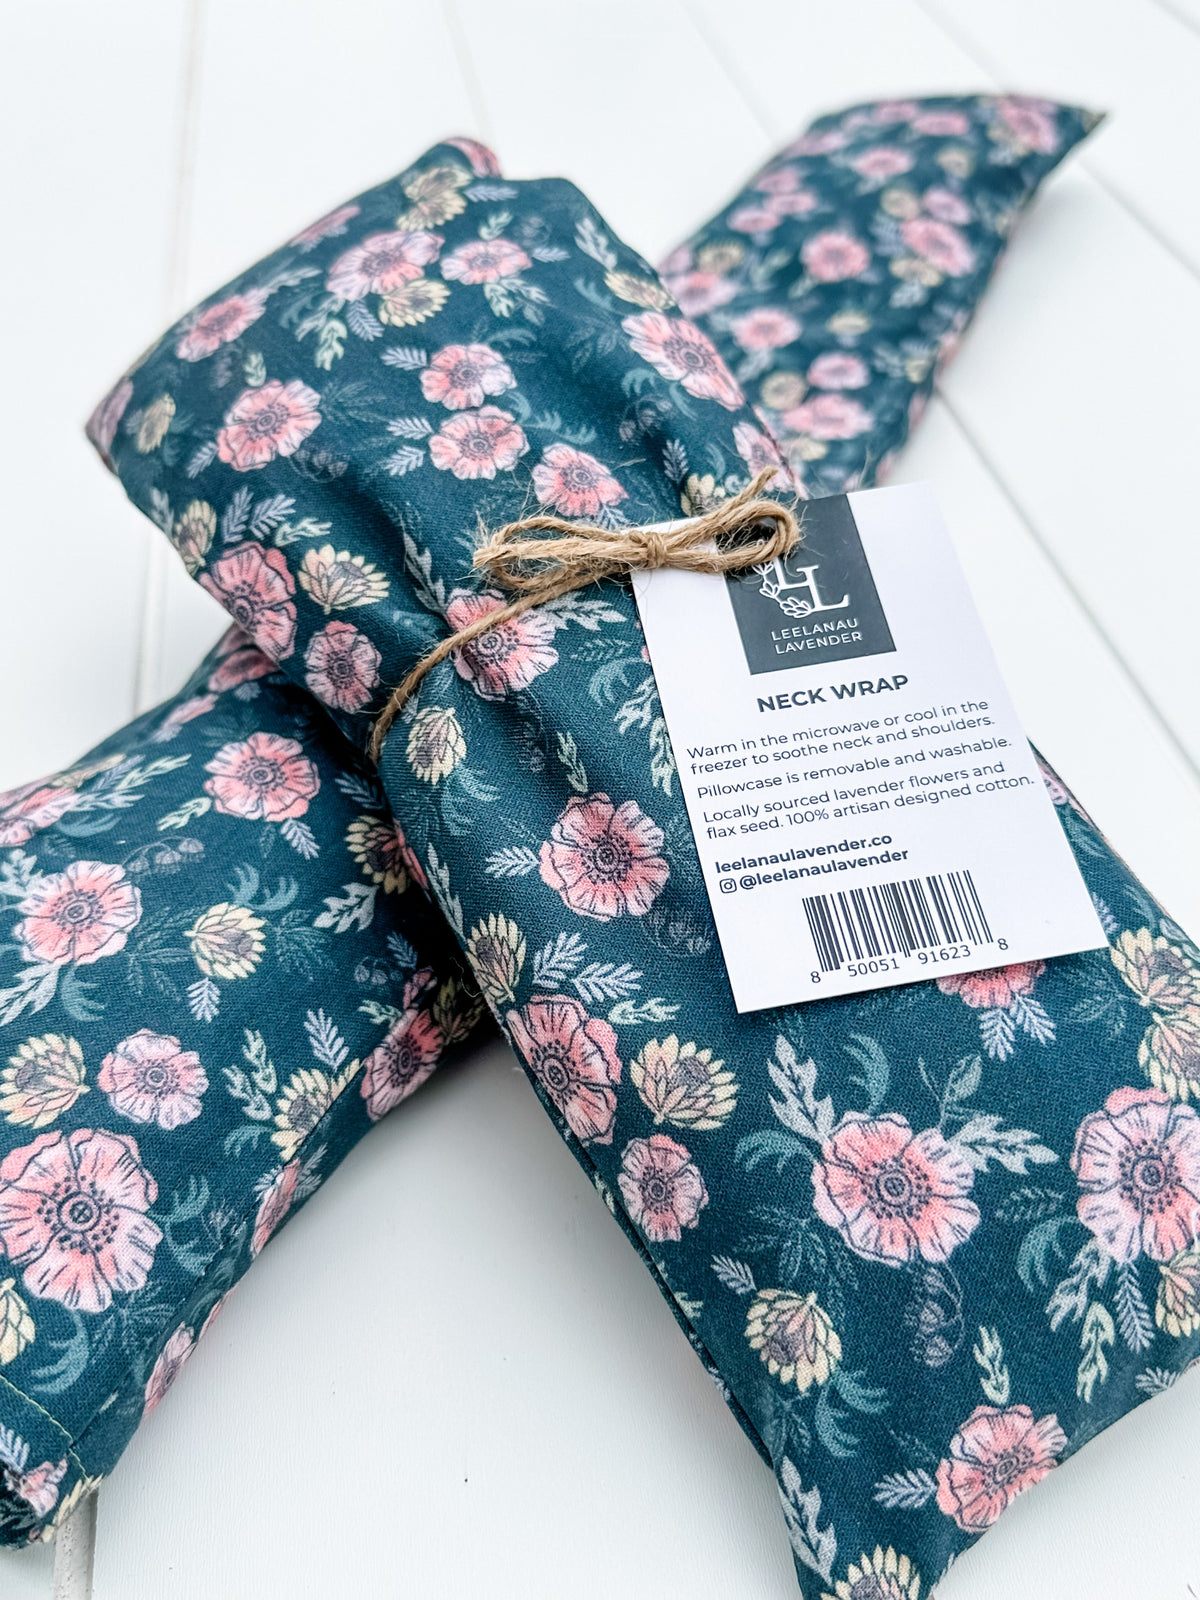 Lavender neck wrap with artisan designed flower fabric